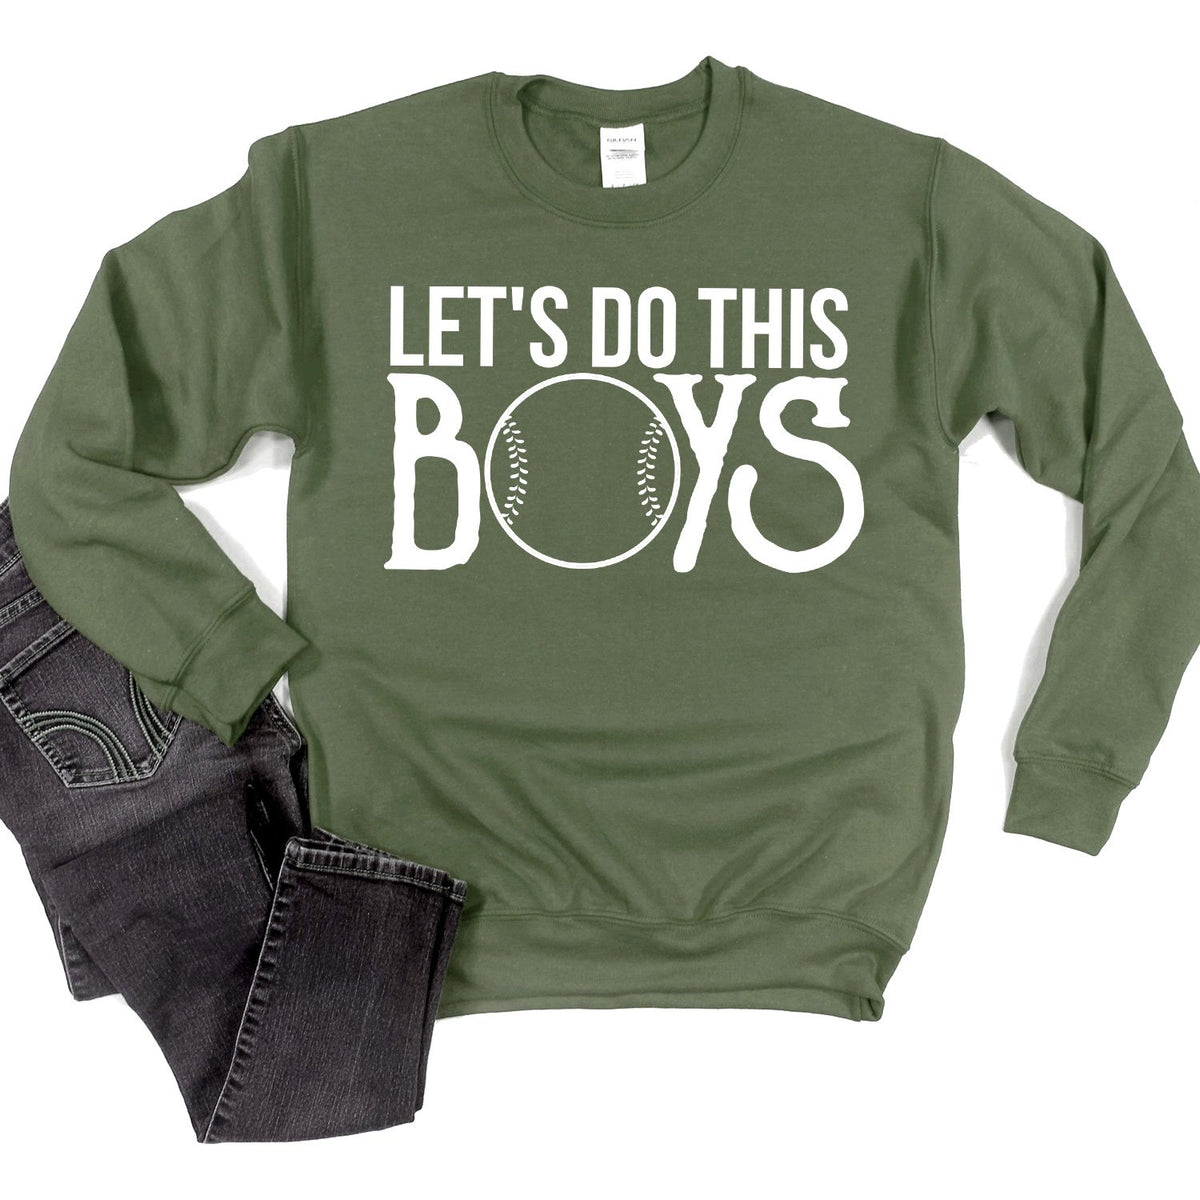 Lets Do This Boys - Long Sleeve Heavy Crewneck Sweatshirt